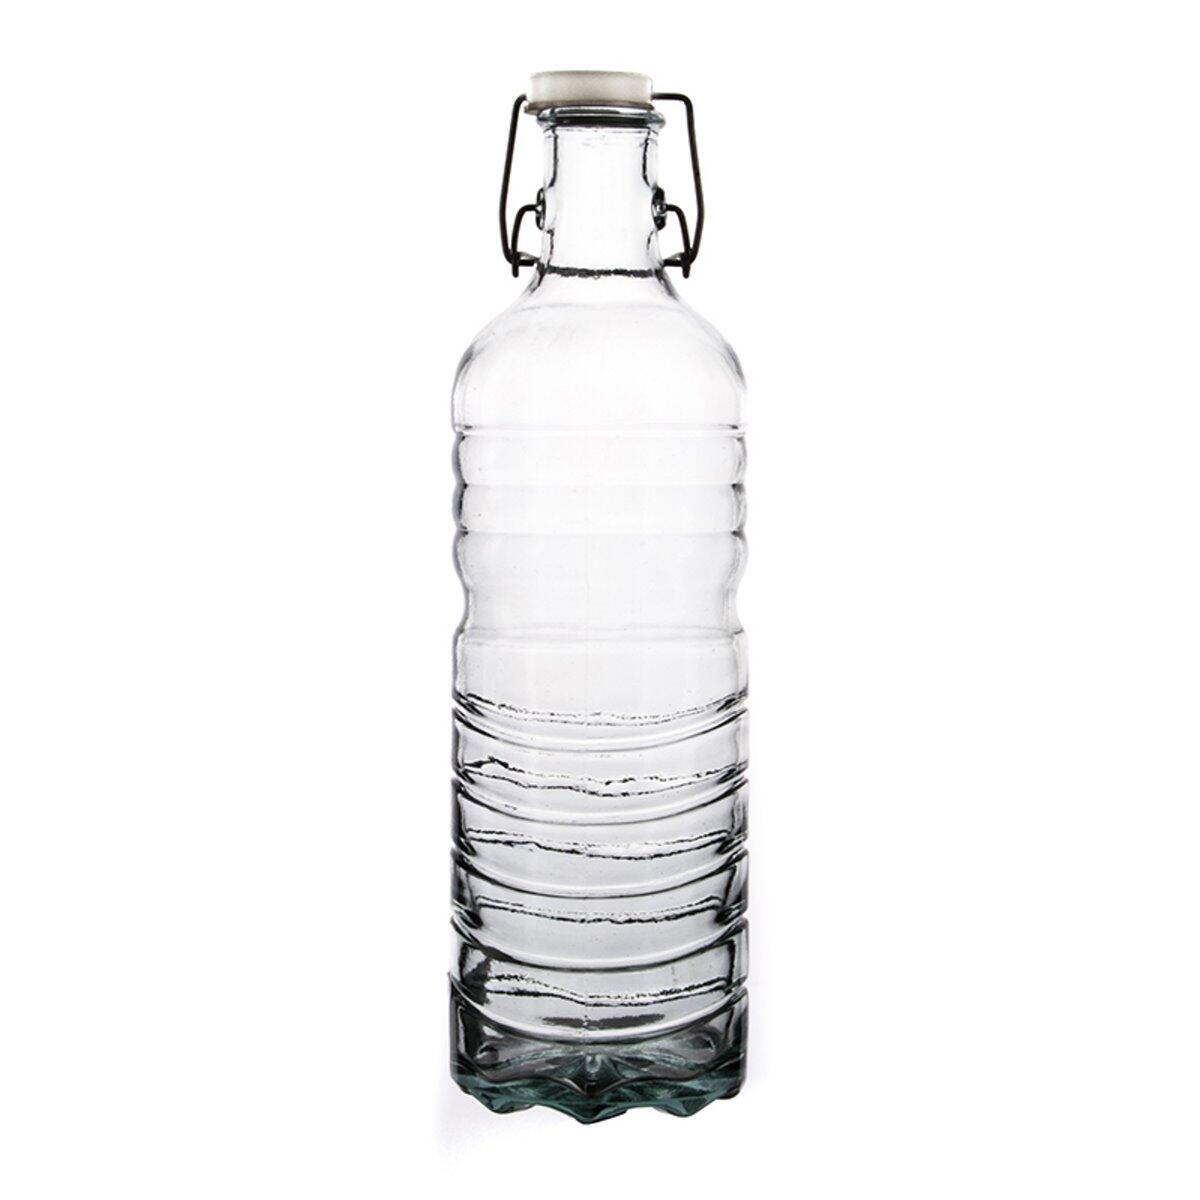 Sanmiguel Corked Bottle 1 Liter